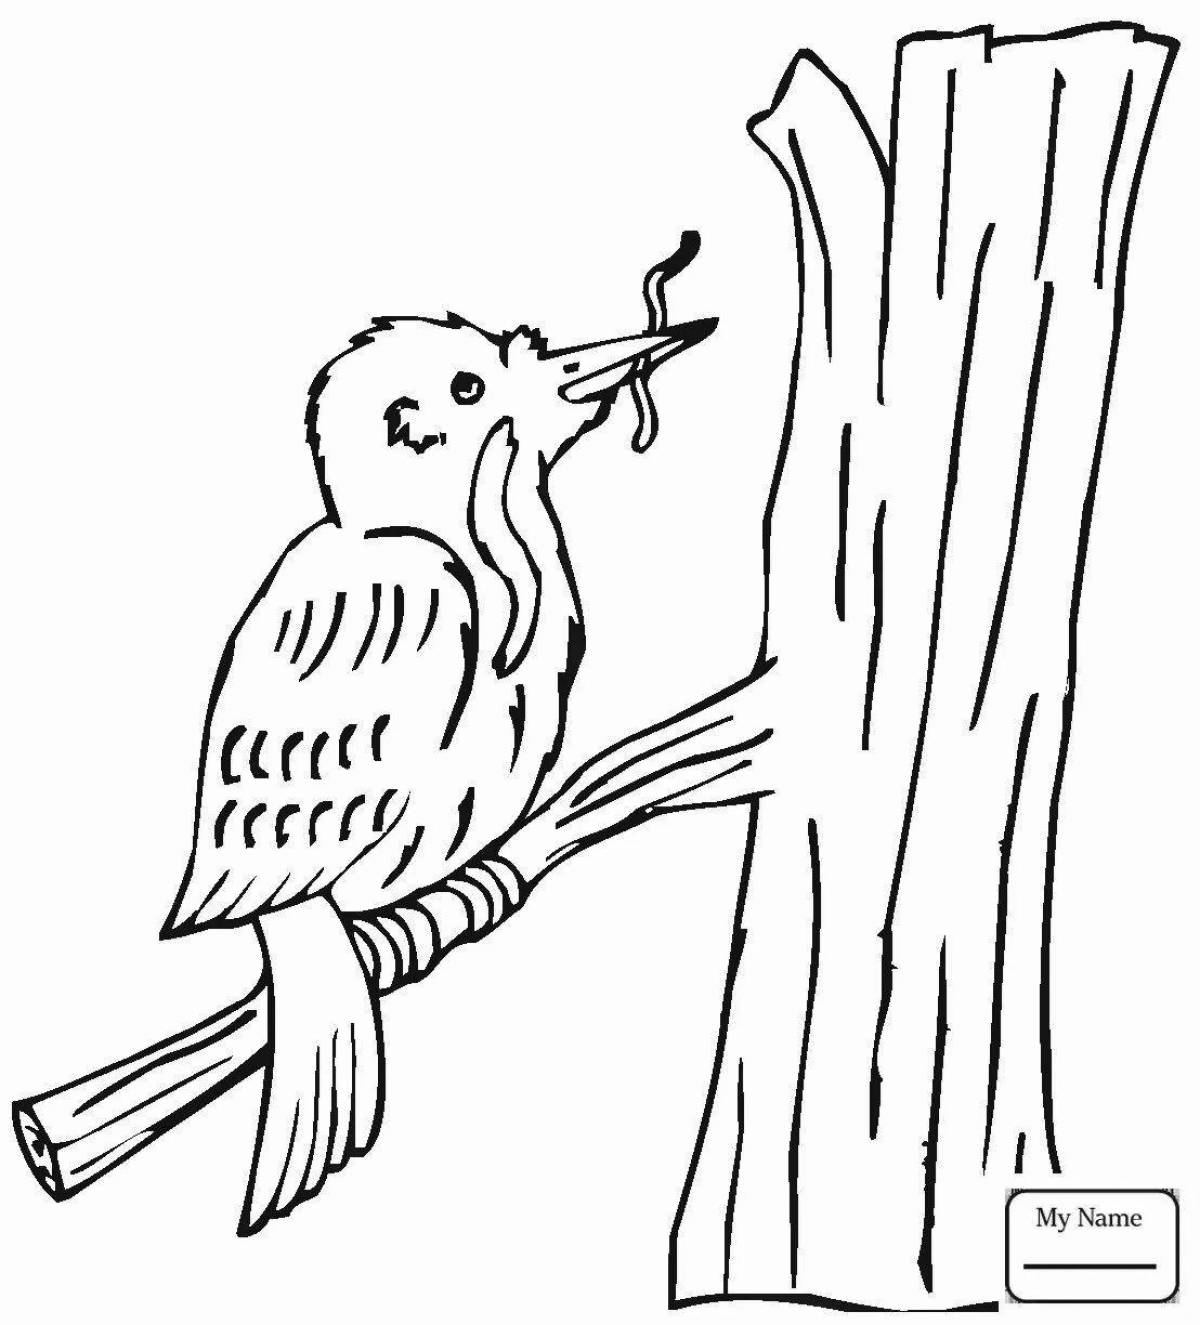 Hypnotic ruffled sparrow drawing